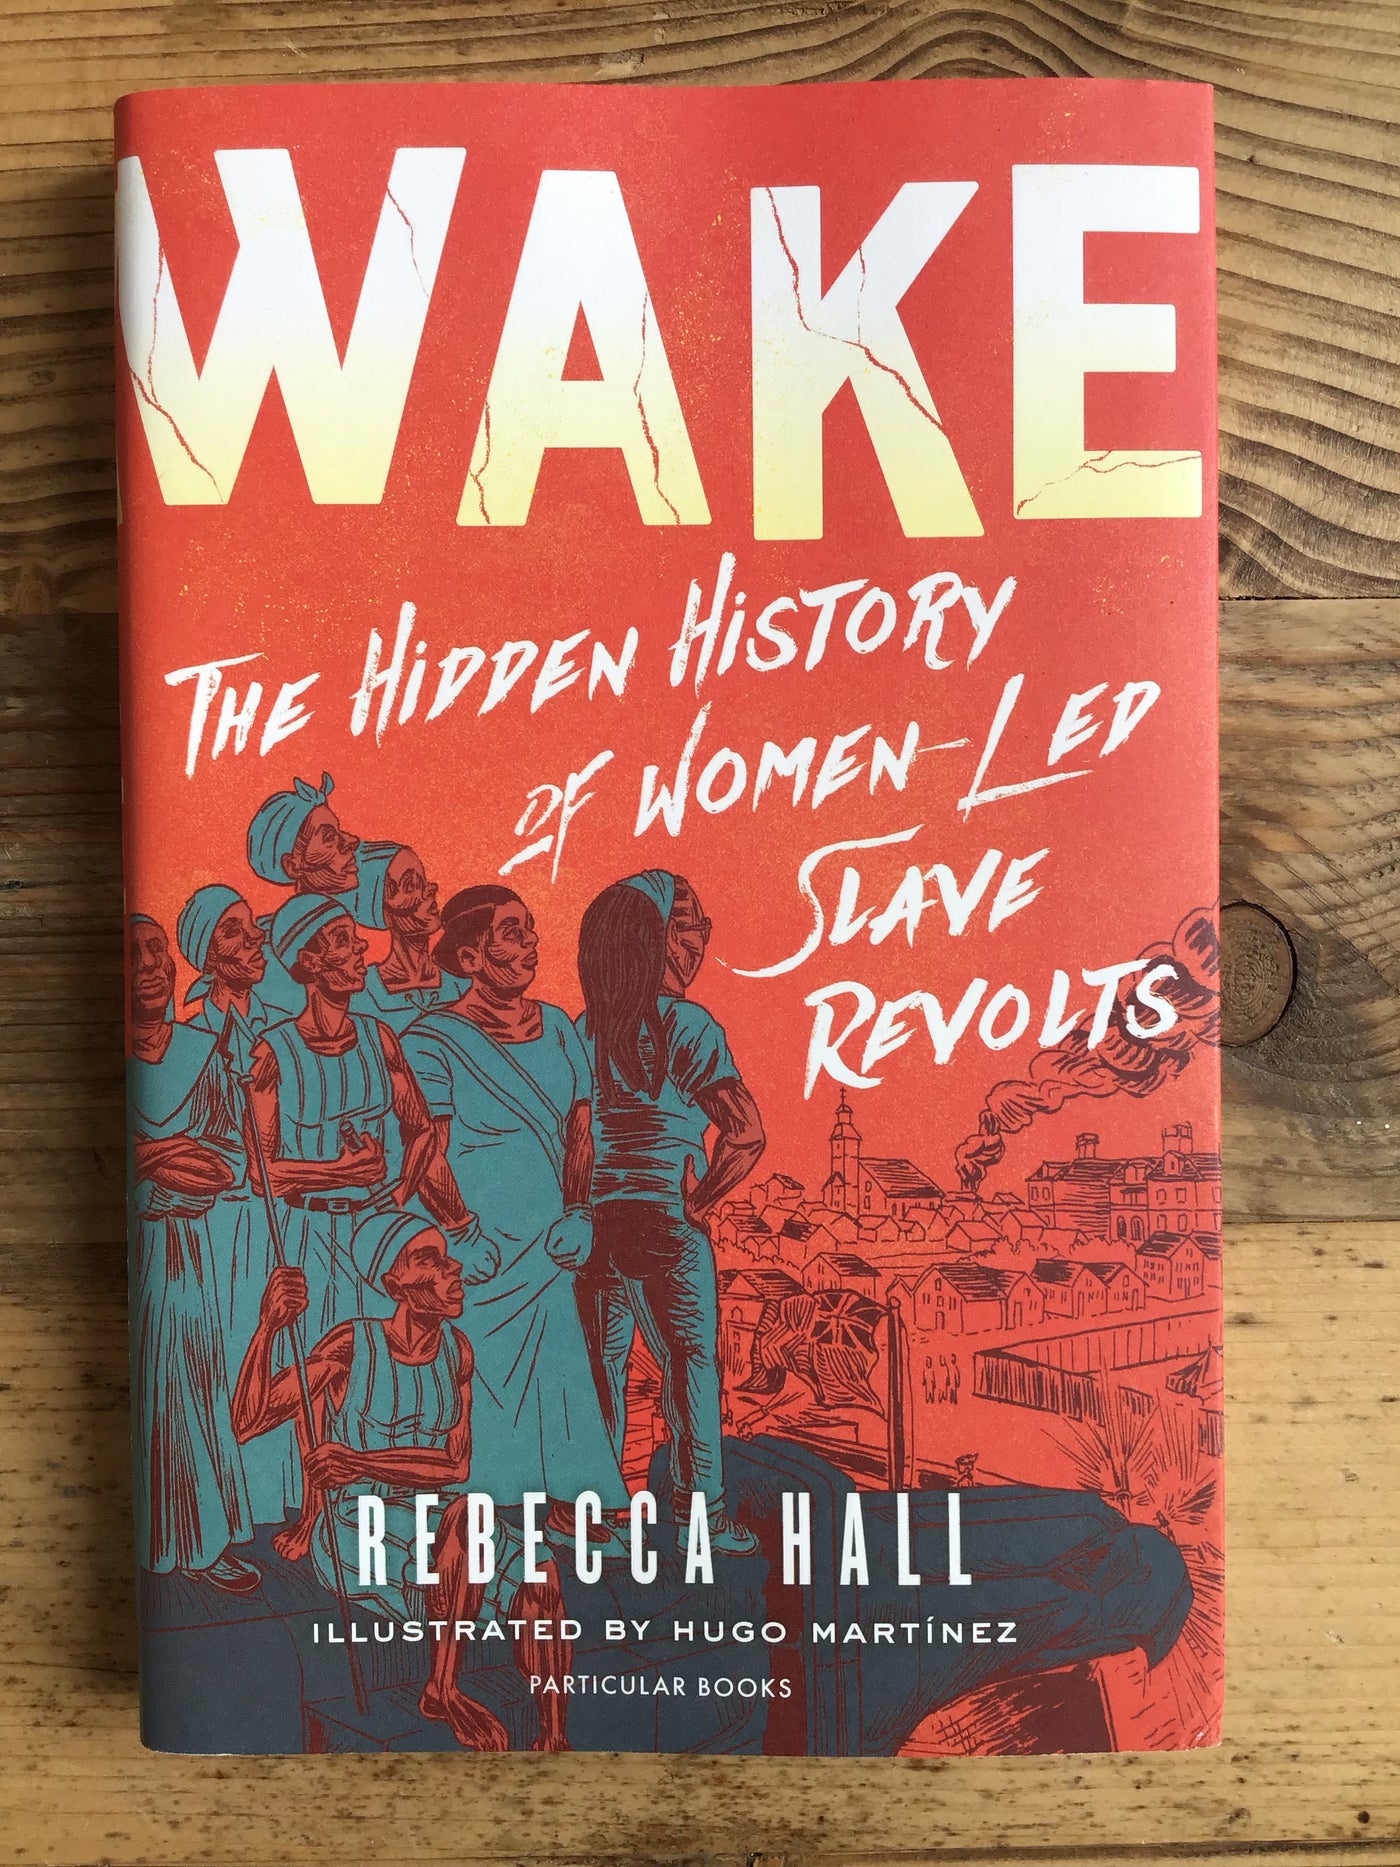 Wake : The Hidden History of Women-Led Slave Revolts